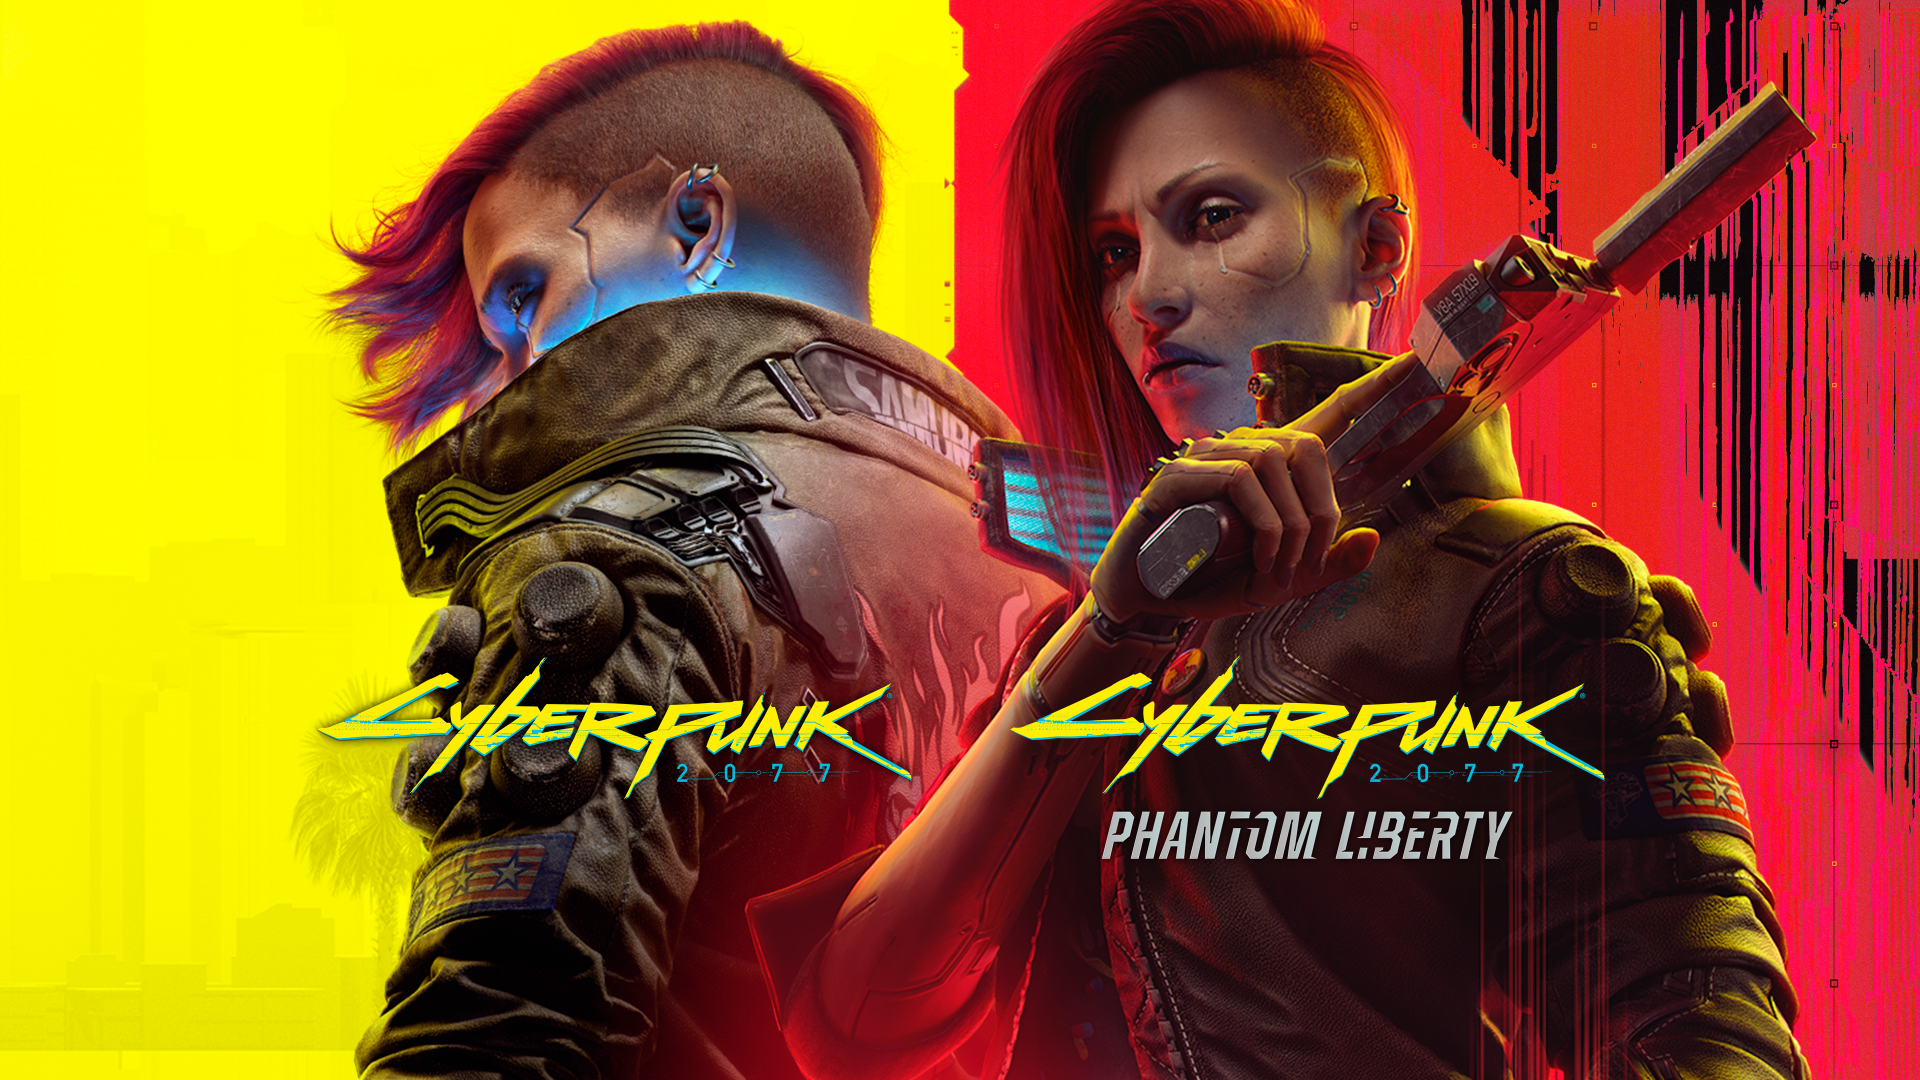 Cyberpunk 2077 Phantom Liberty. [3840x2160] and [1920x1080] : r/wallpaper